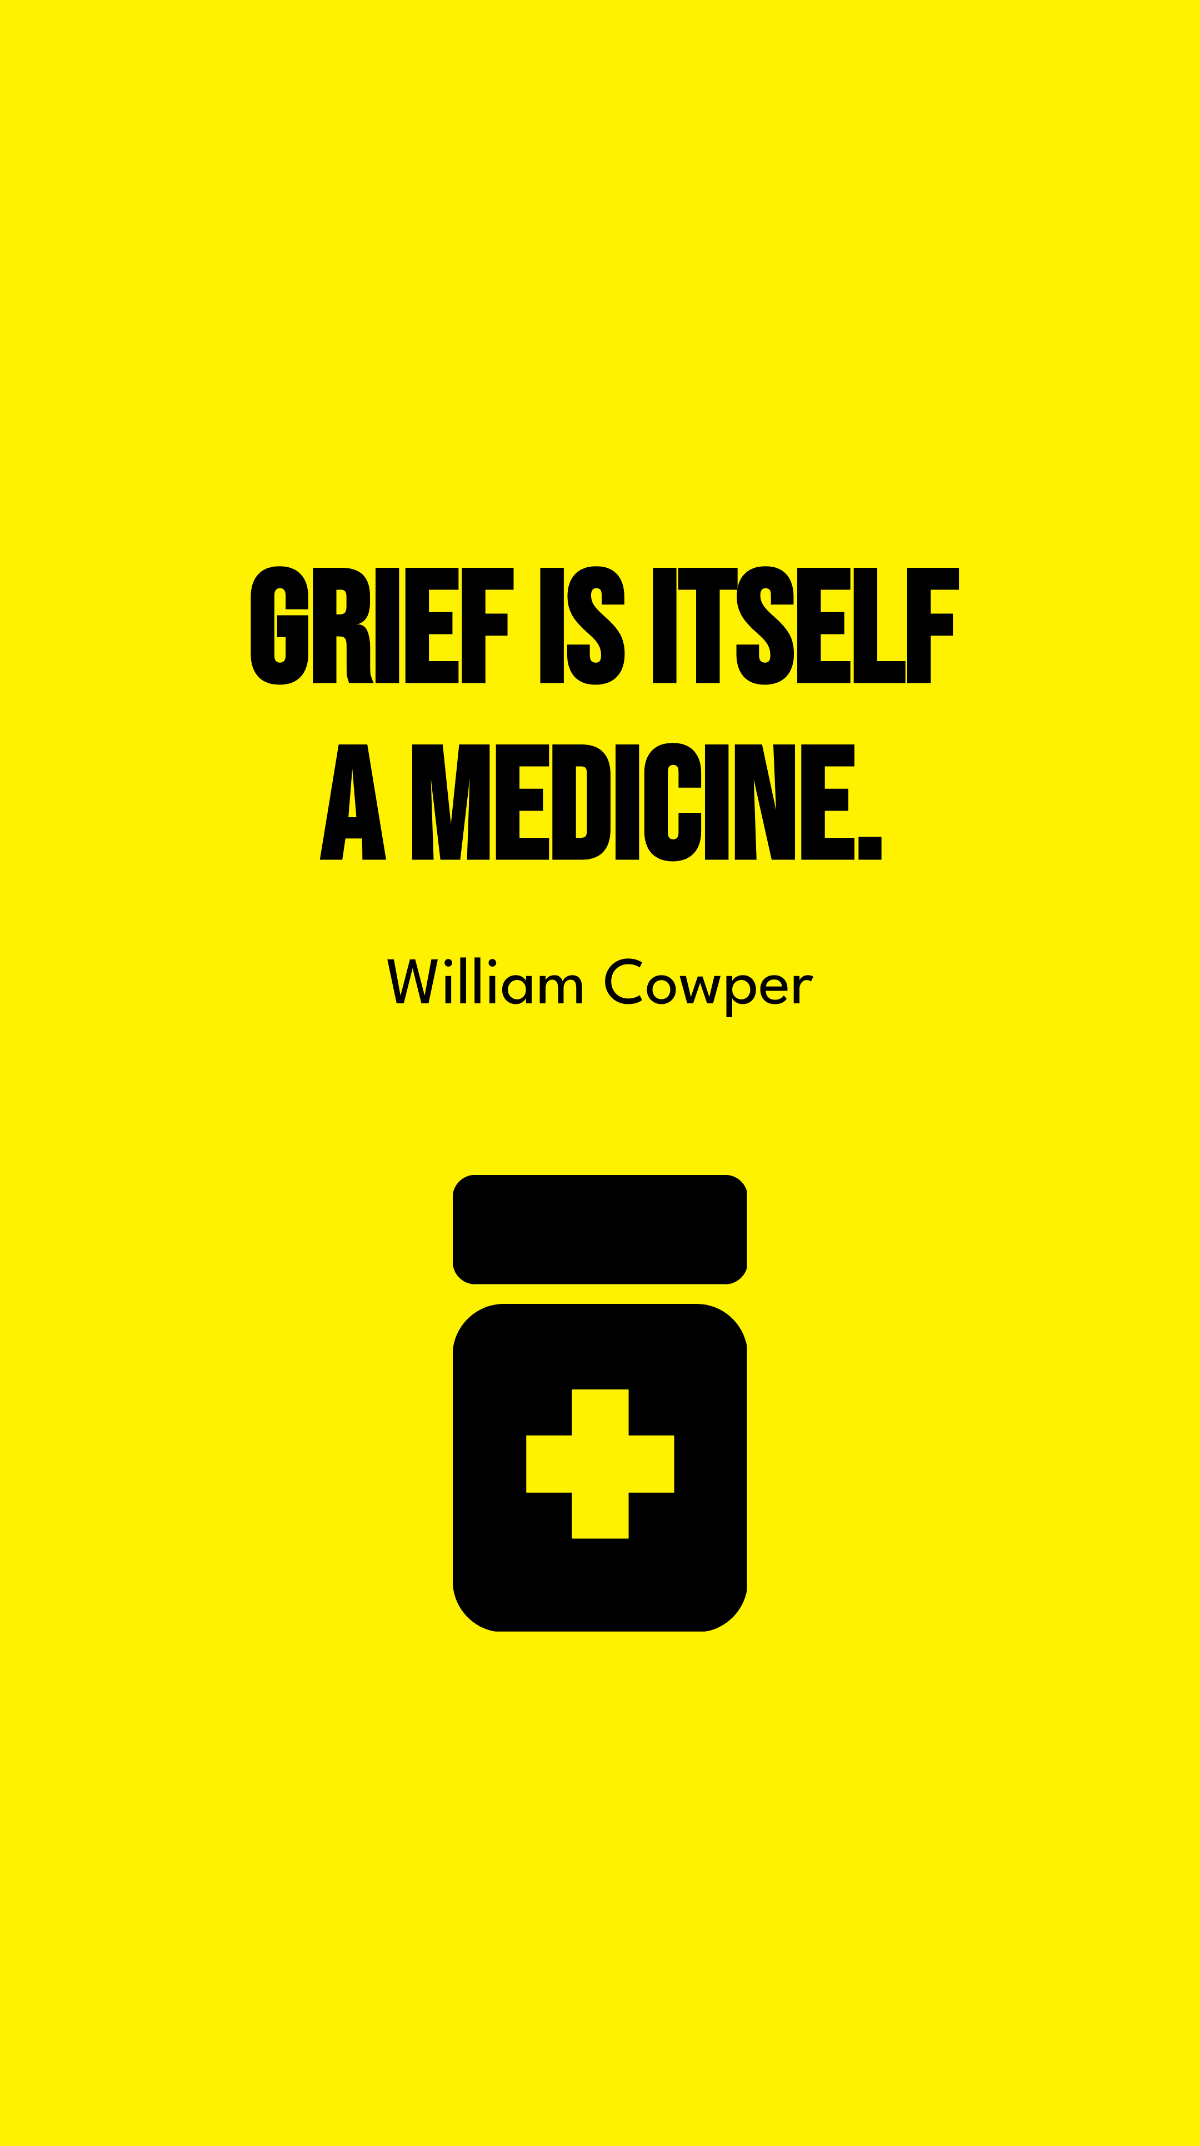 William Cowper - Grief is itself a medicine.